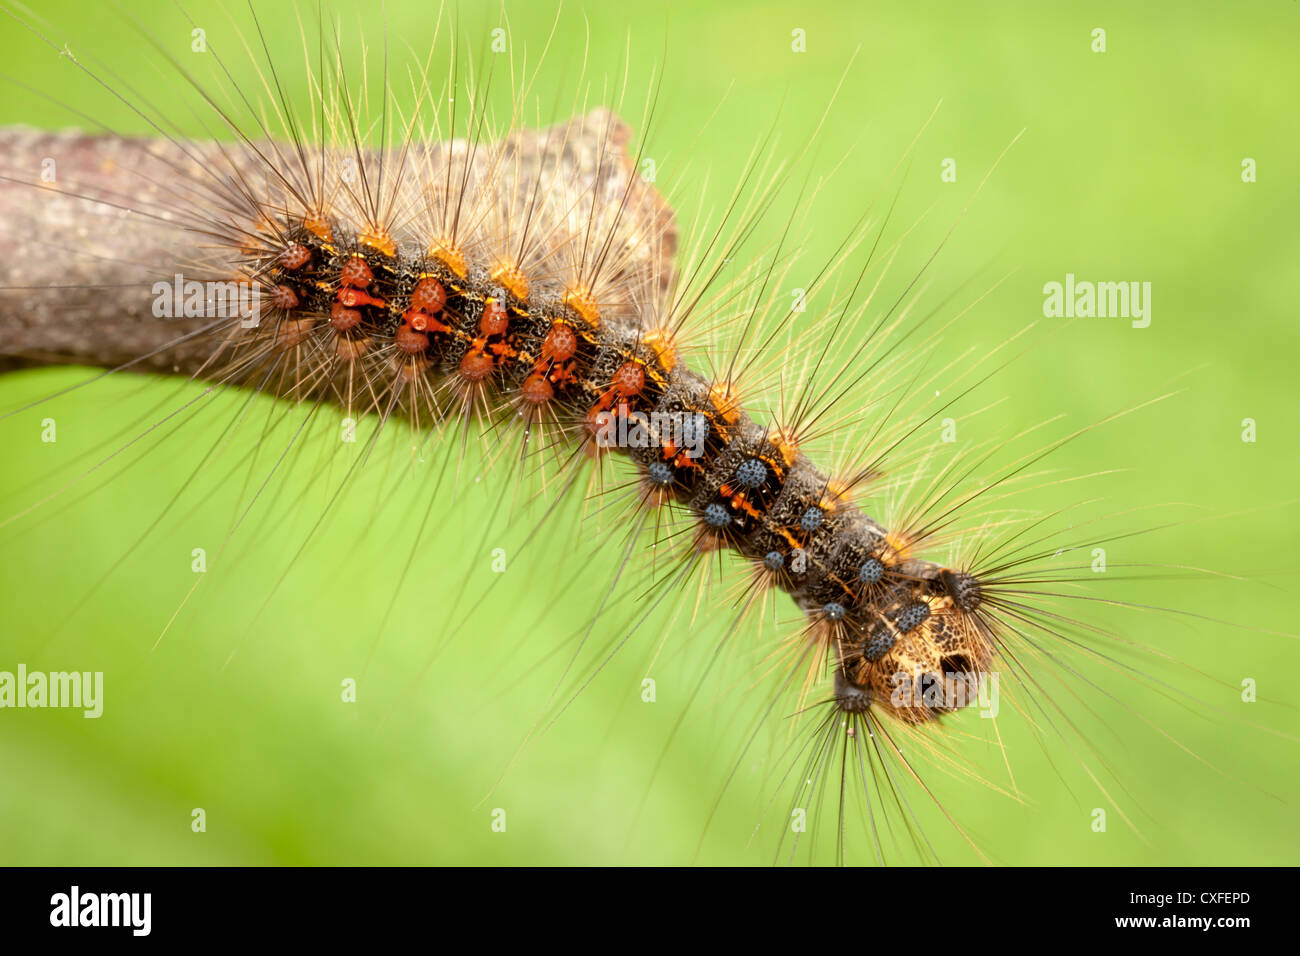 Gypsy Moth Caterpillar Stock Photos & Gypsy Moth Caterpillar Stock Images - Alamy1300 x 956